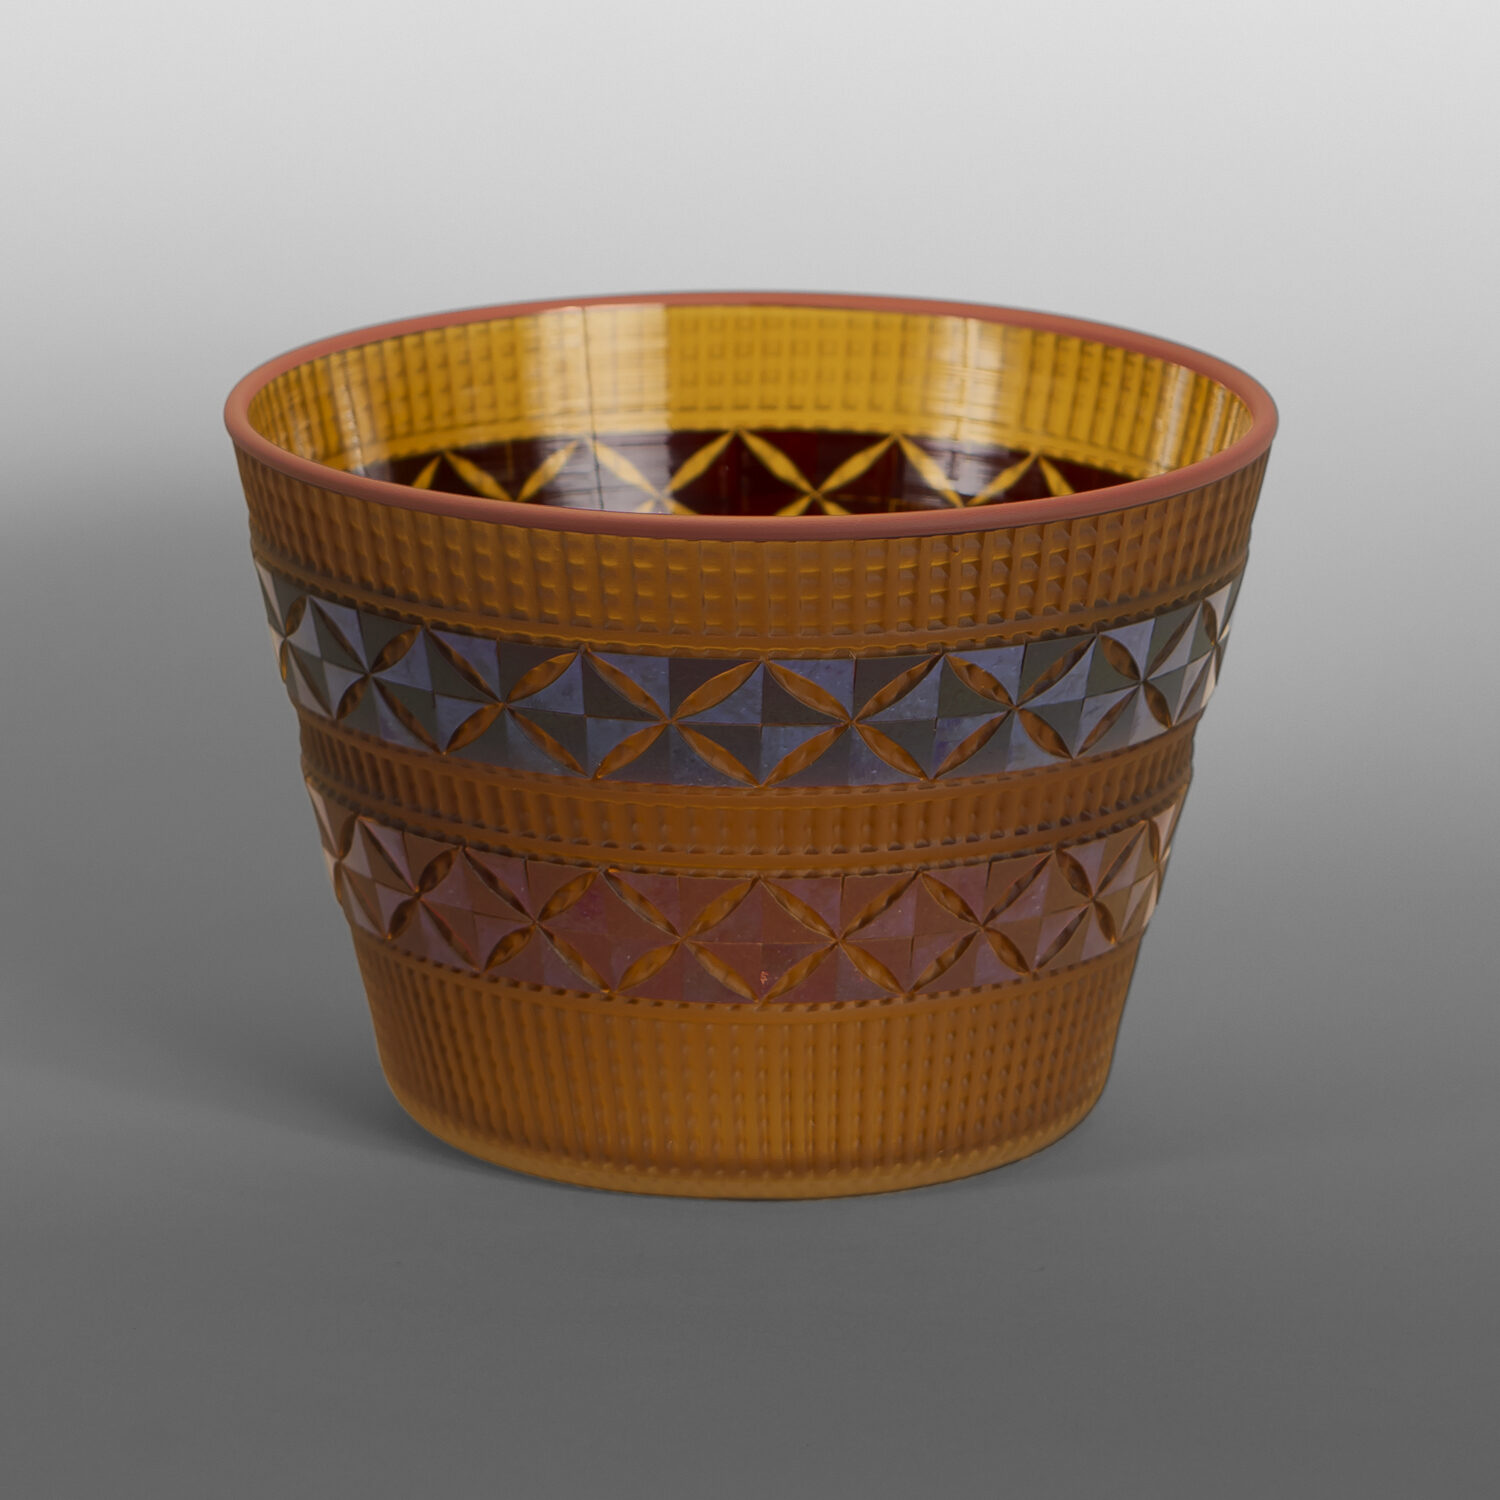 Dark Amber Basket & Cedar Basket
Preston Singletary
TlingitSand-carved glass
6 ½" x 4 ¾"
$3000